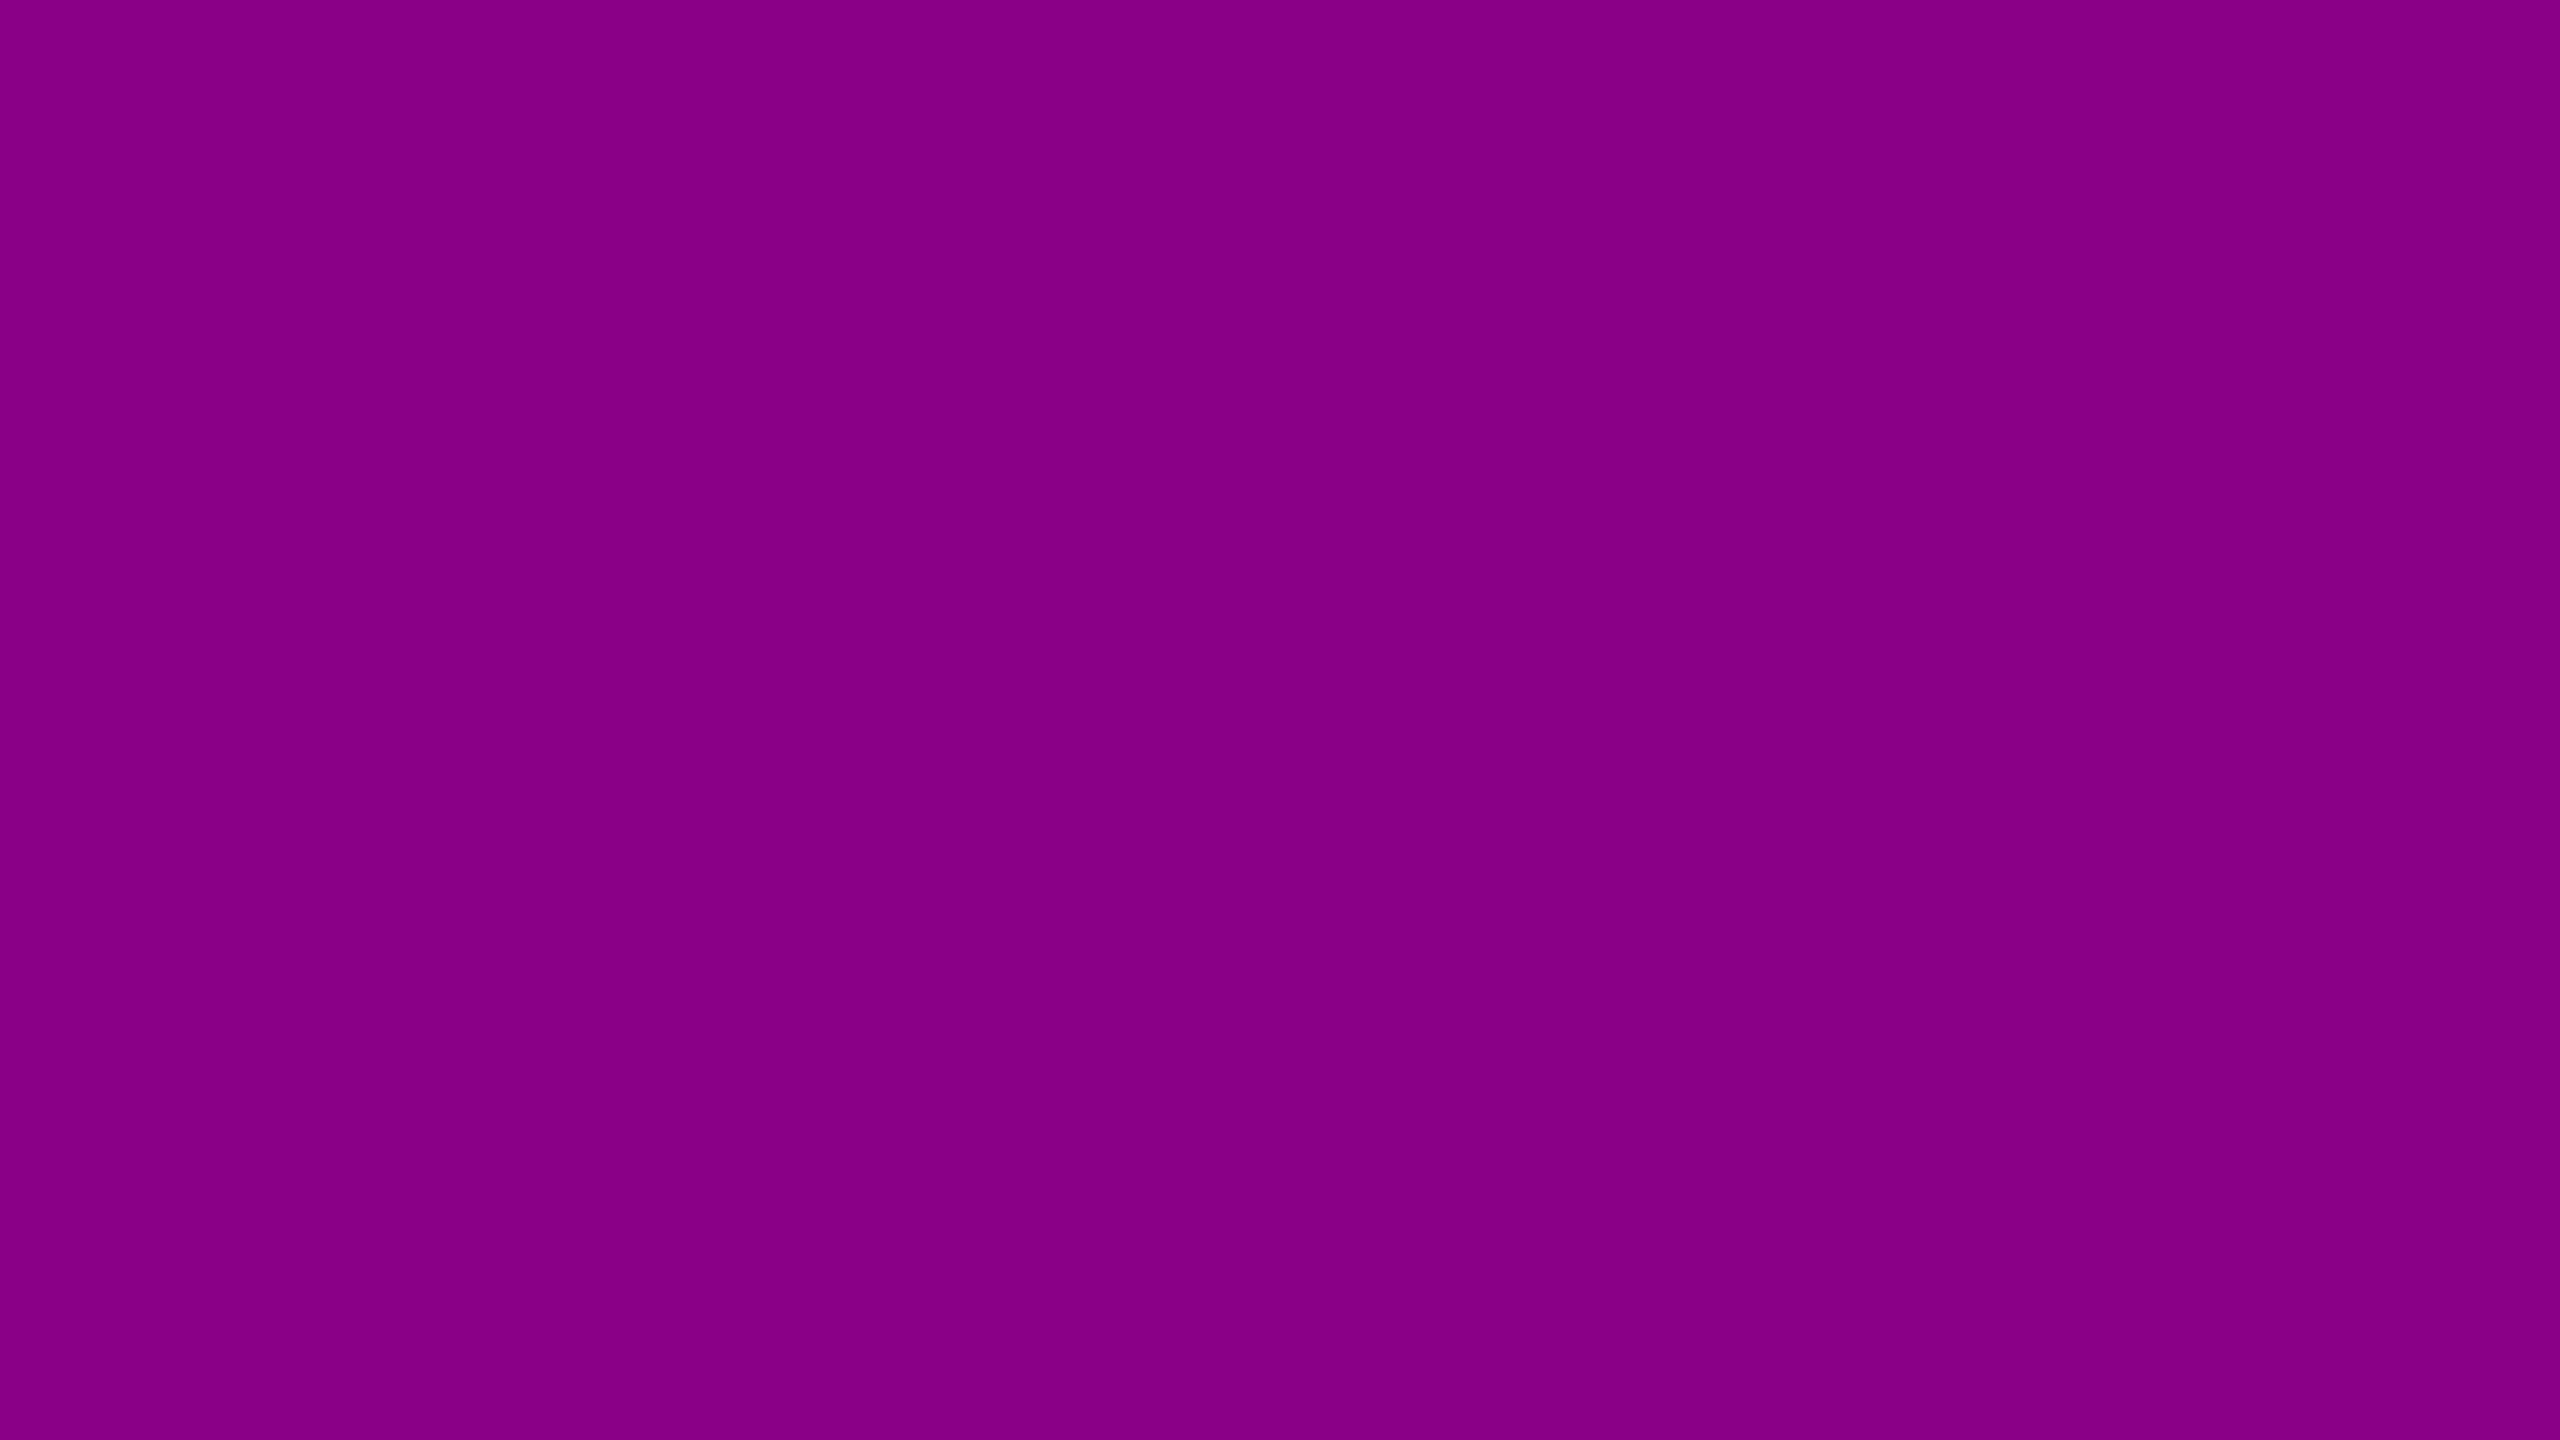 2560x1440 Mardi Gras Solid Color Background